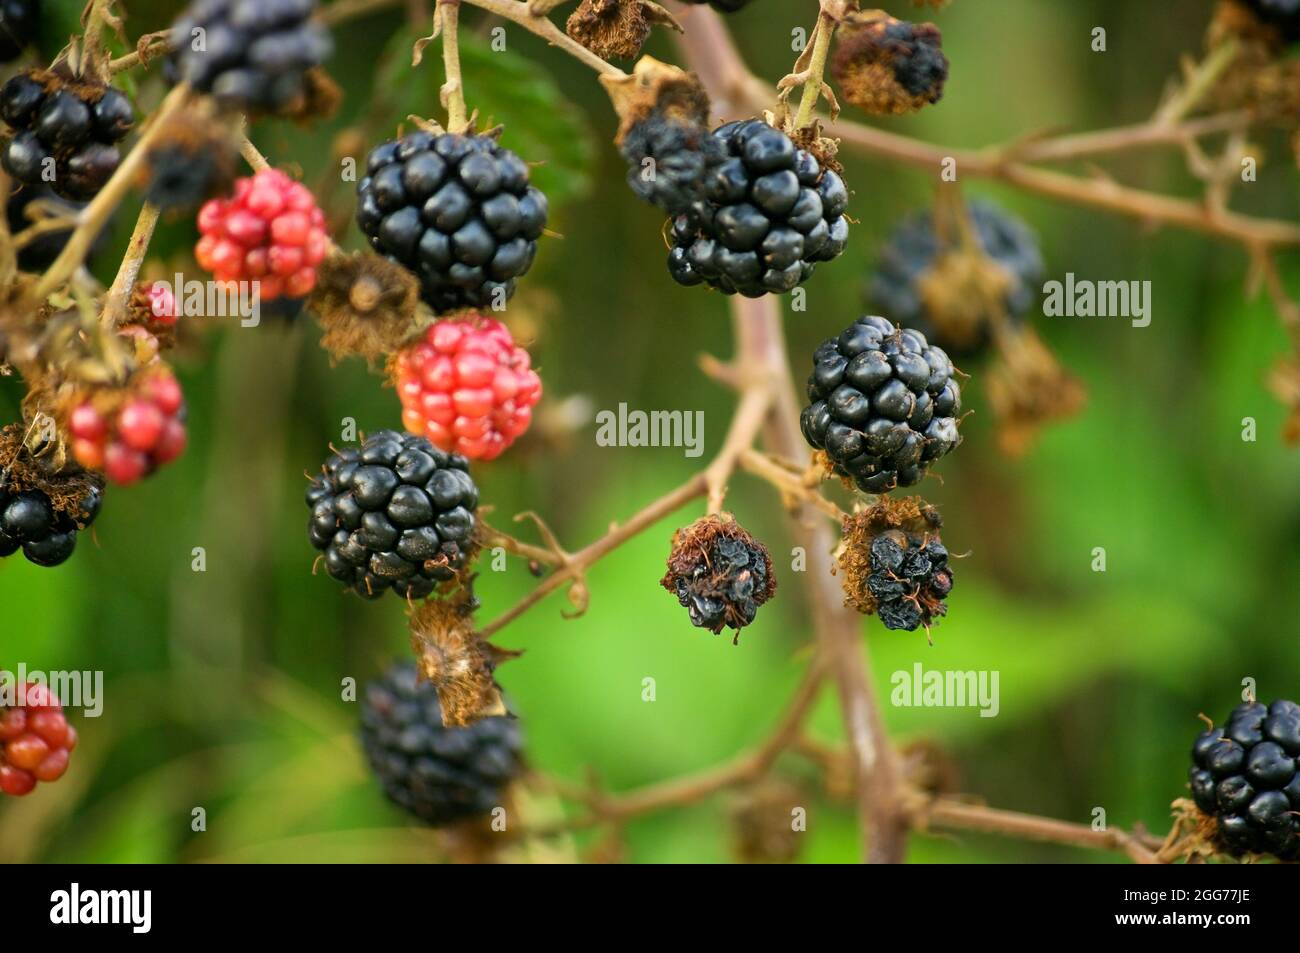 Black raspberry or wild blackberries on the Mediterranean coast. Stock Photo